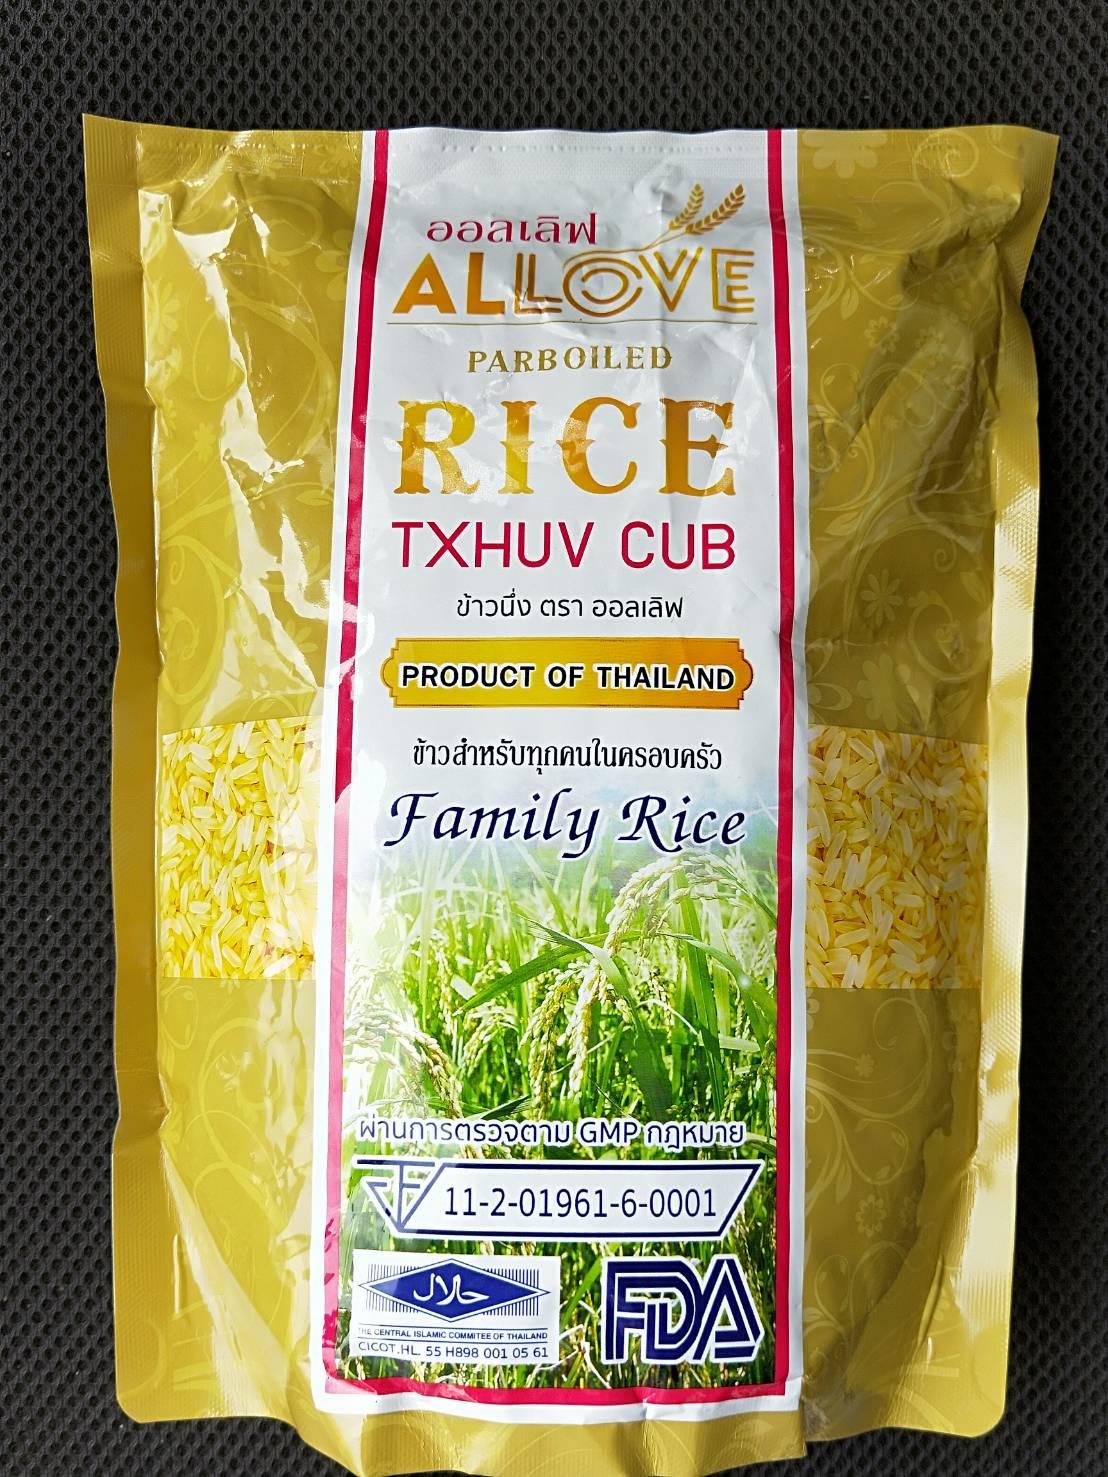 ALLOVE rice LOW GI ข้าวสารลดเบาหวาน ข้าวเพื่อสุขภาพ ( 1 ถุงเท่ากับ 1 กิโลกรัมผสมข้าวปกติ ได้ 3 เท่า) 1 ถุง